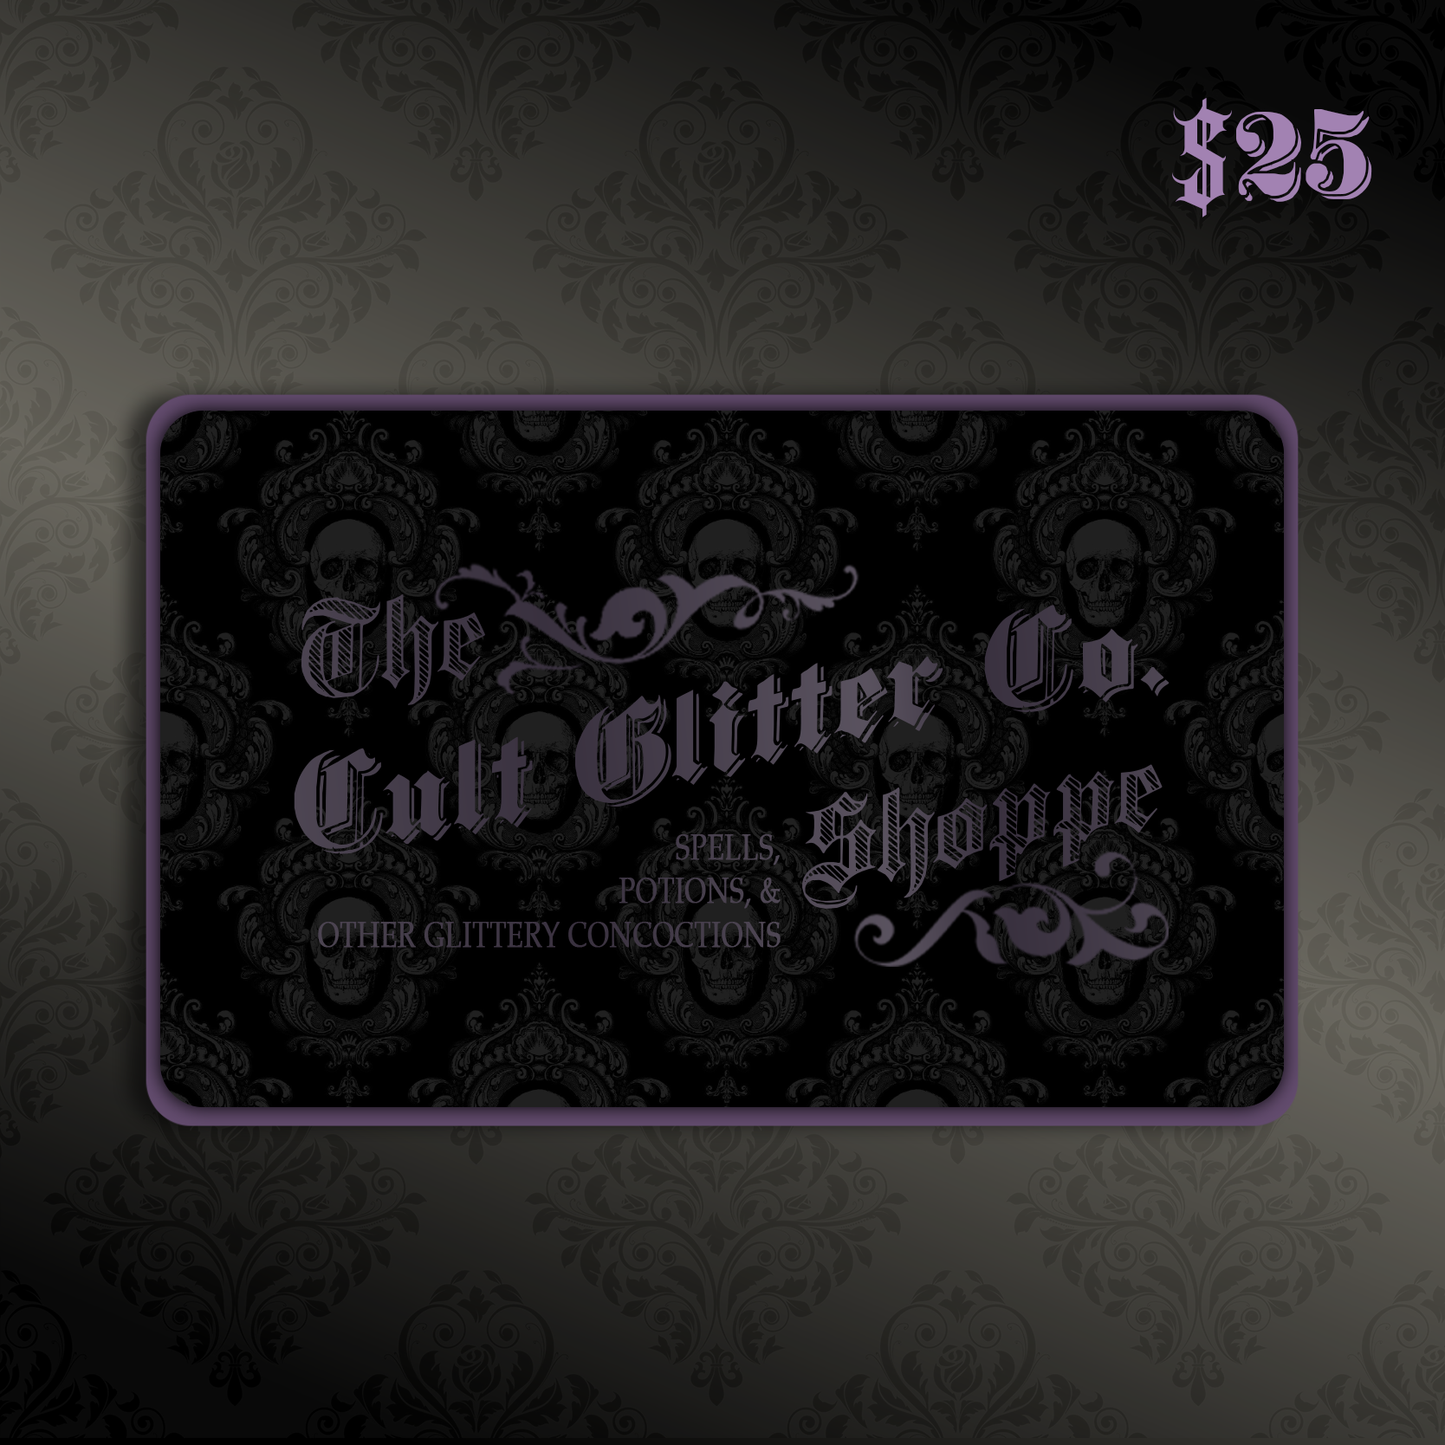 $25 Cult Glitter Gift Card